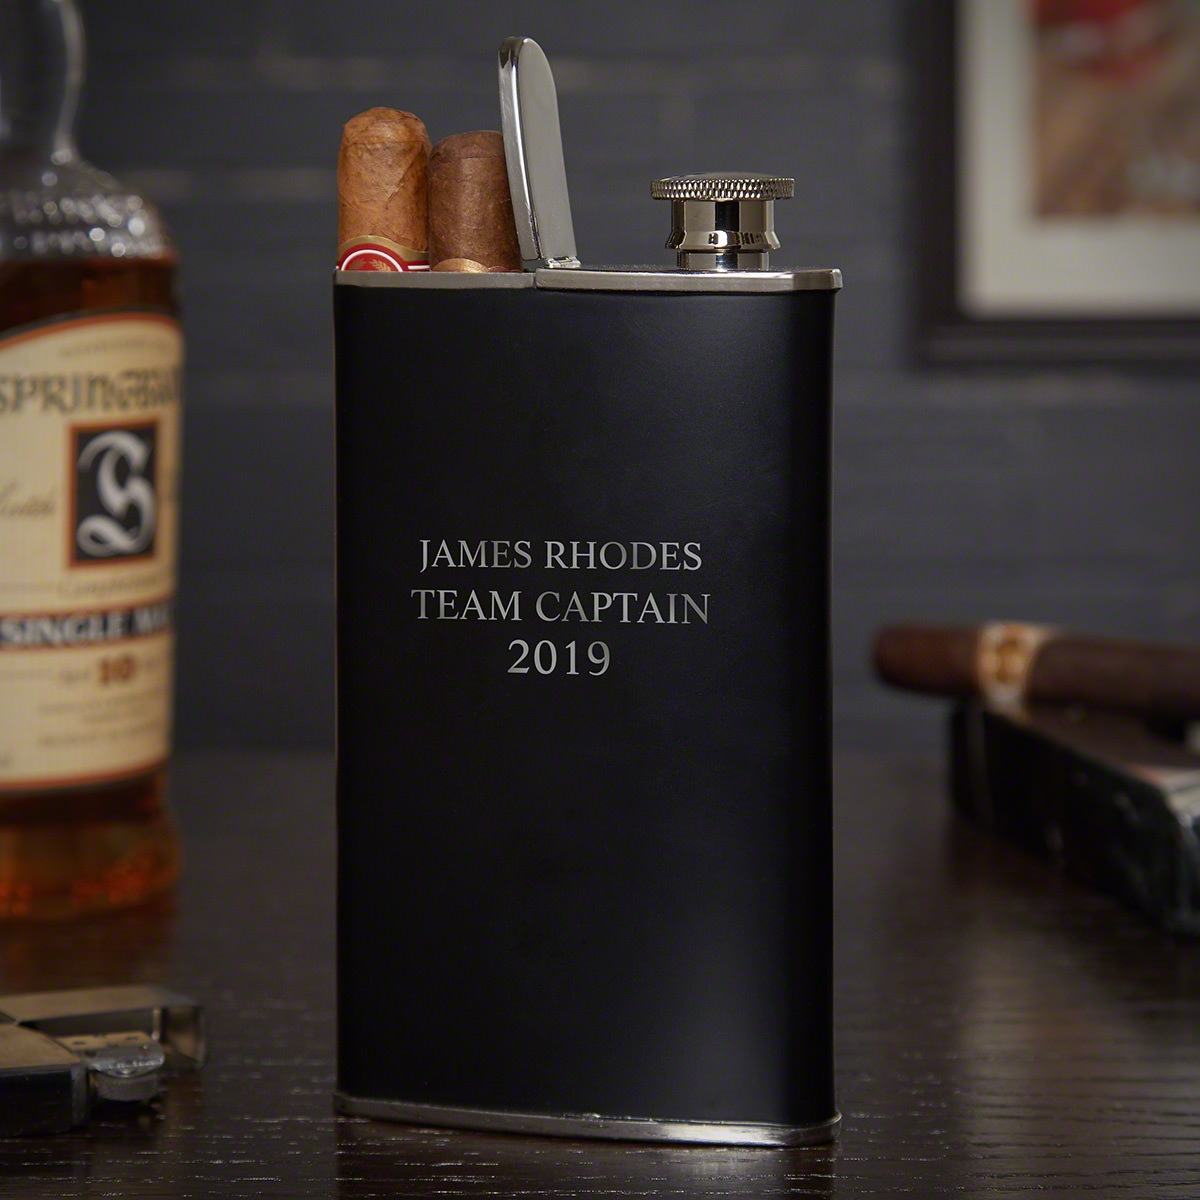 Personalised Cigar Case Hip Flask Custom Engraved Tube Holder Luxury Smoking Drinking Gift Free Engraving Gift Box Smokers Whisky Brandy Men